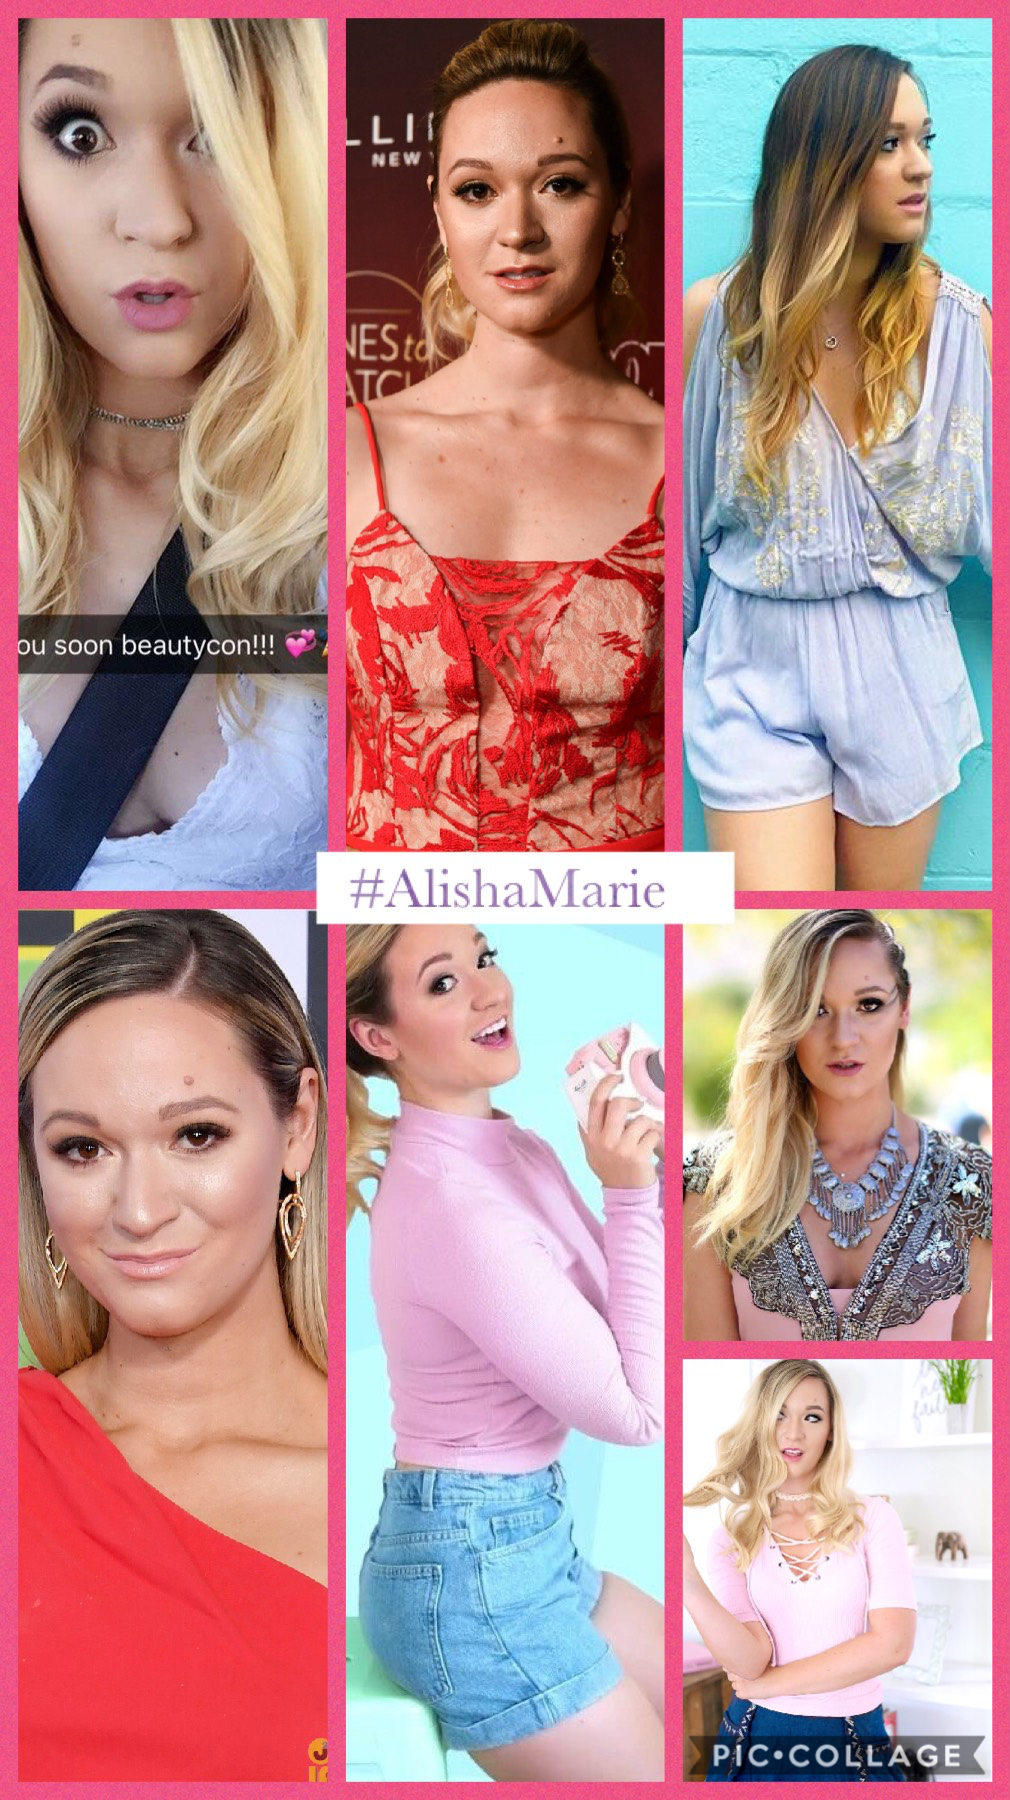                           ~Tap~
                
              I love Alisha Marie!
 If you love Alisha Marie like this collage!
 
               Comment, like, follow me,          share! 
                Luv ya! Bye!